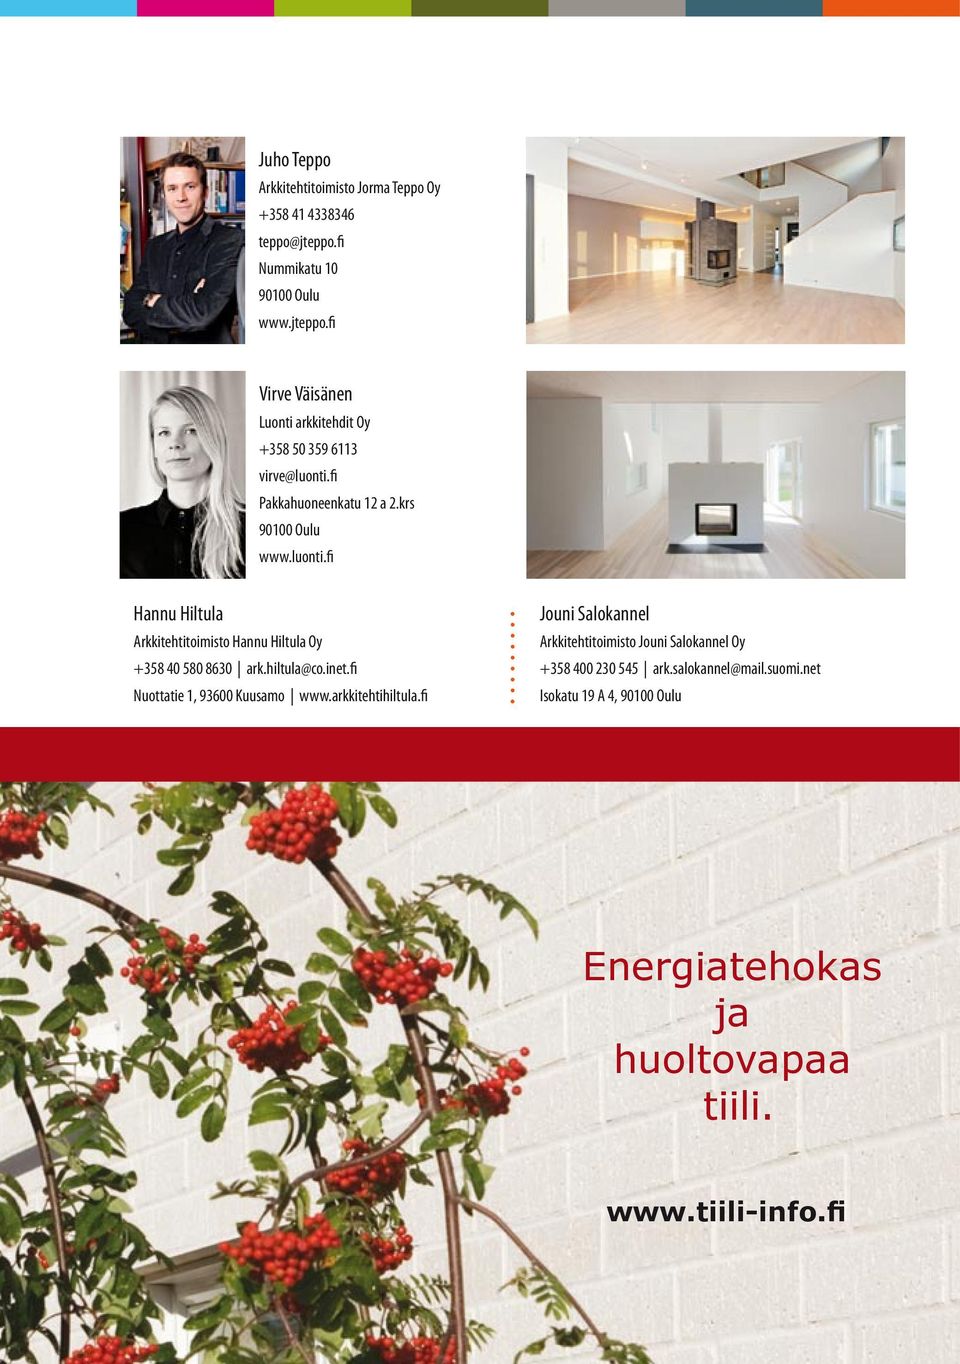 krs 90100 Oulu www.luonti.fi Hannu Hiltula Arkkitehtitoimisto Hannu Hiltula Oy +358 40 580 8630 ark.hiltula@co.inet.